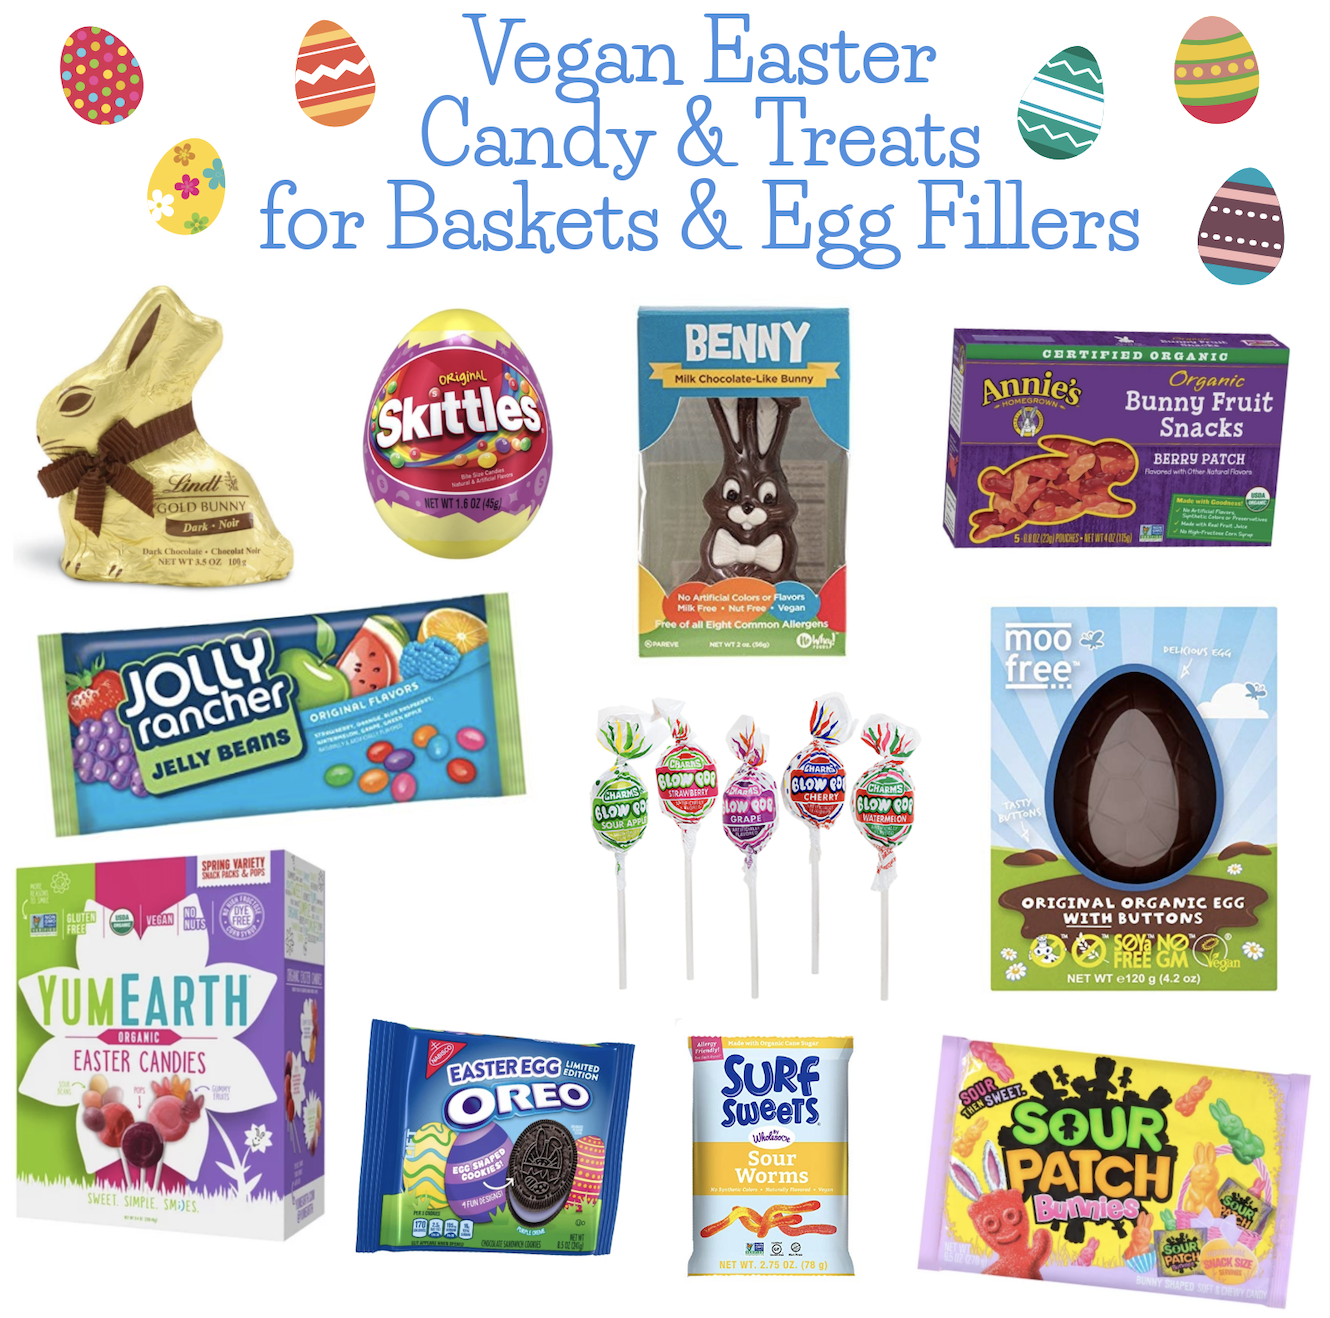 Vegan Easter Candy & Treats for Baskets & Egg Fillers